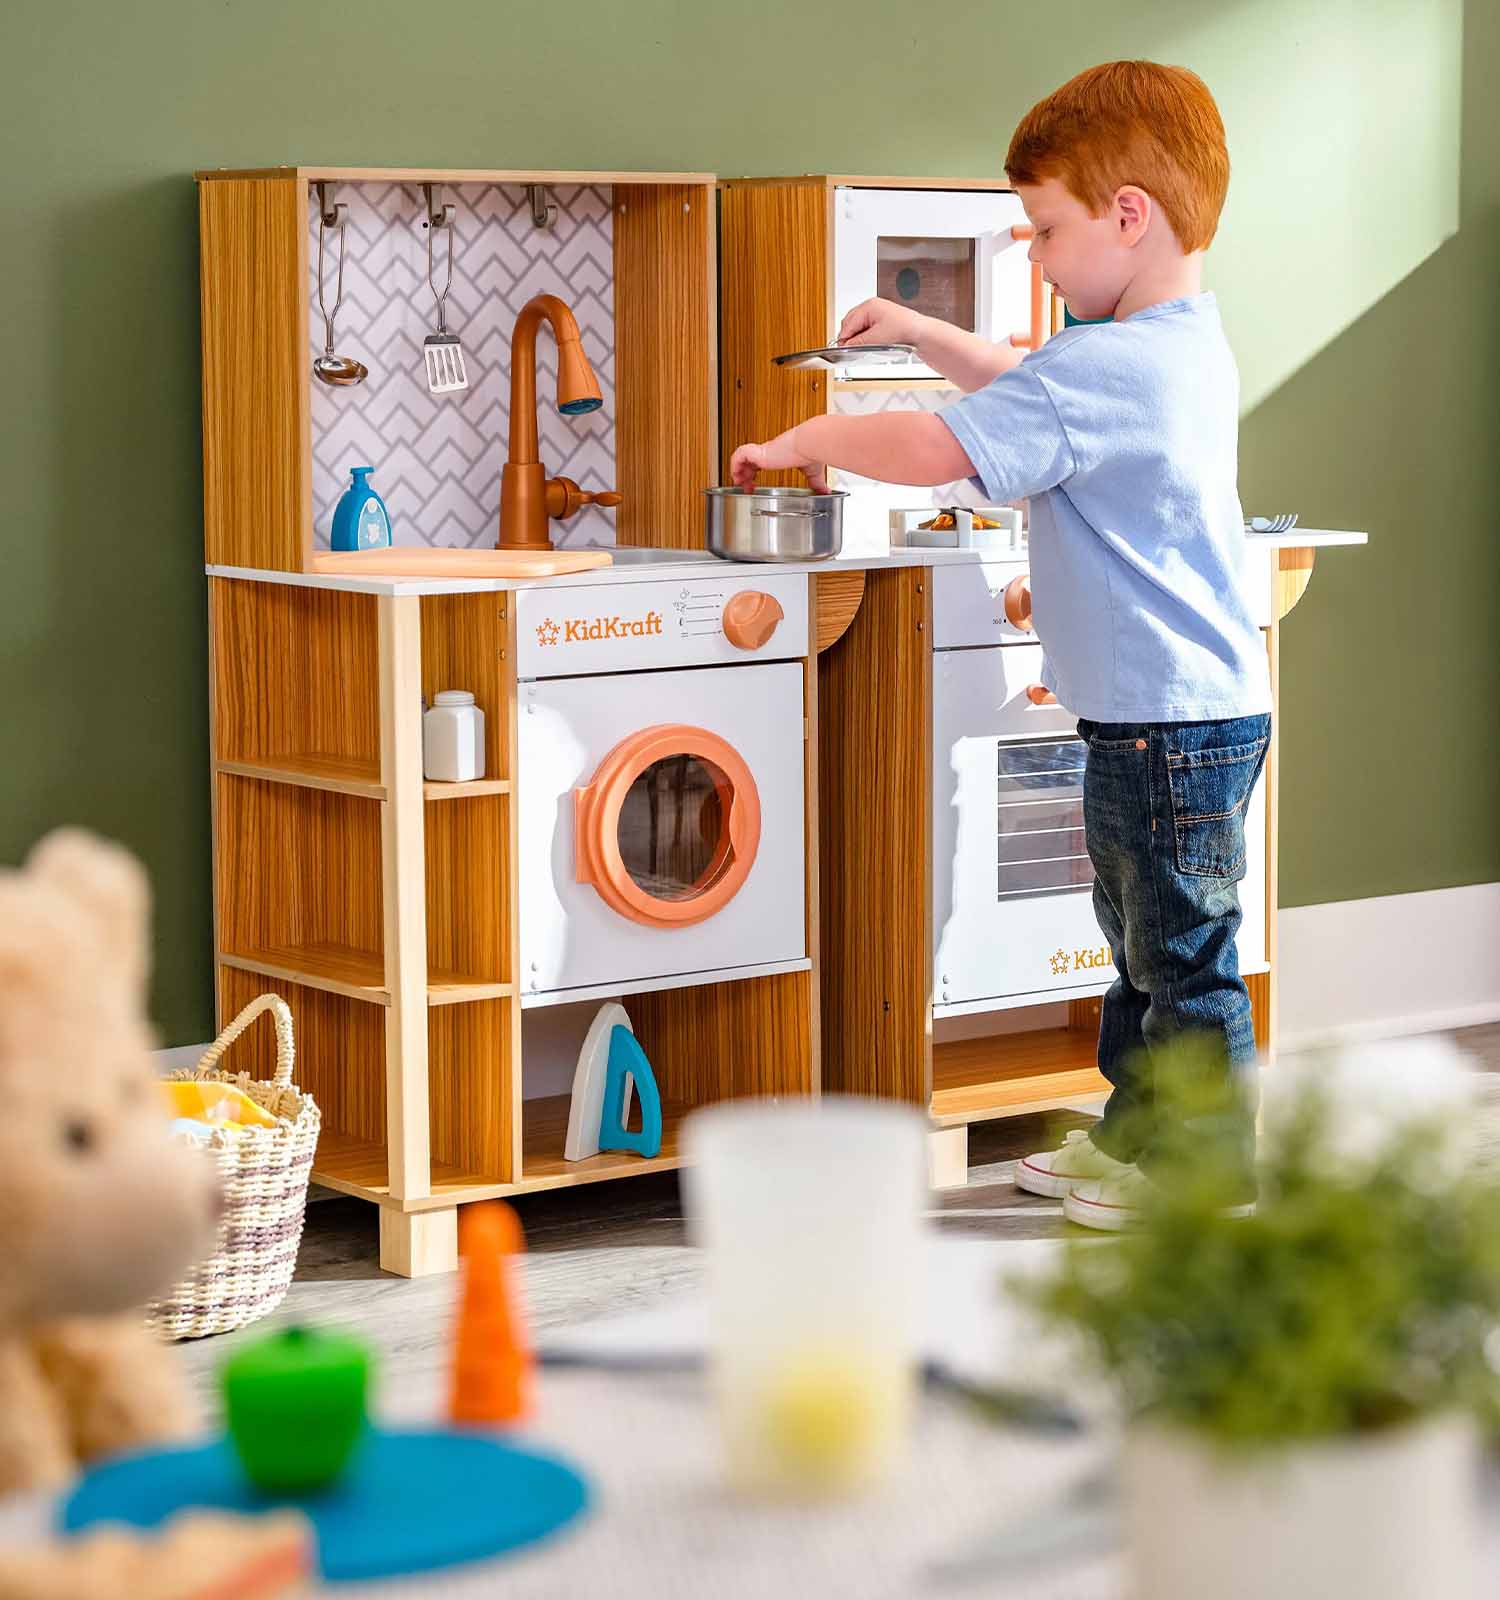 Child playing with KidKraft kitchen set